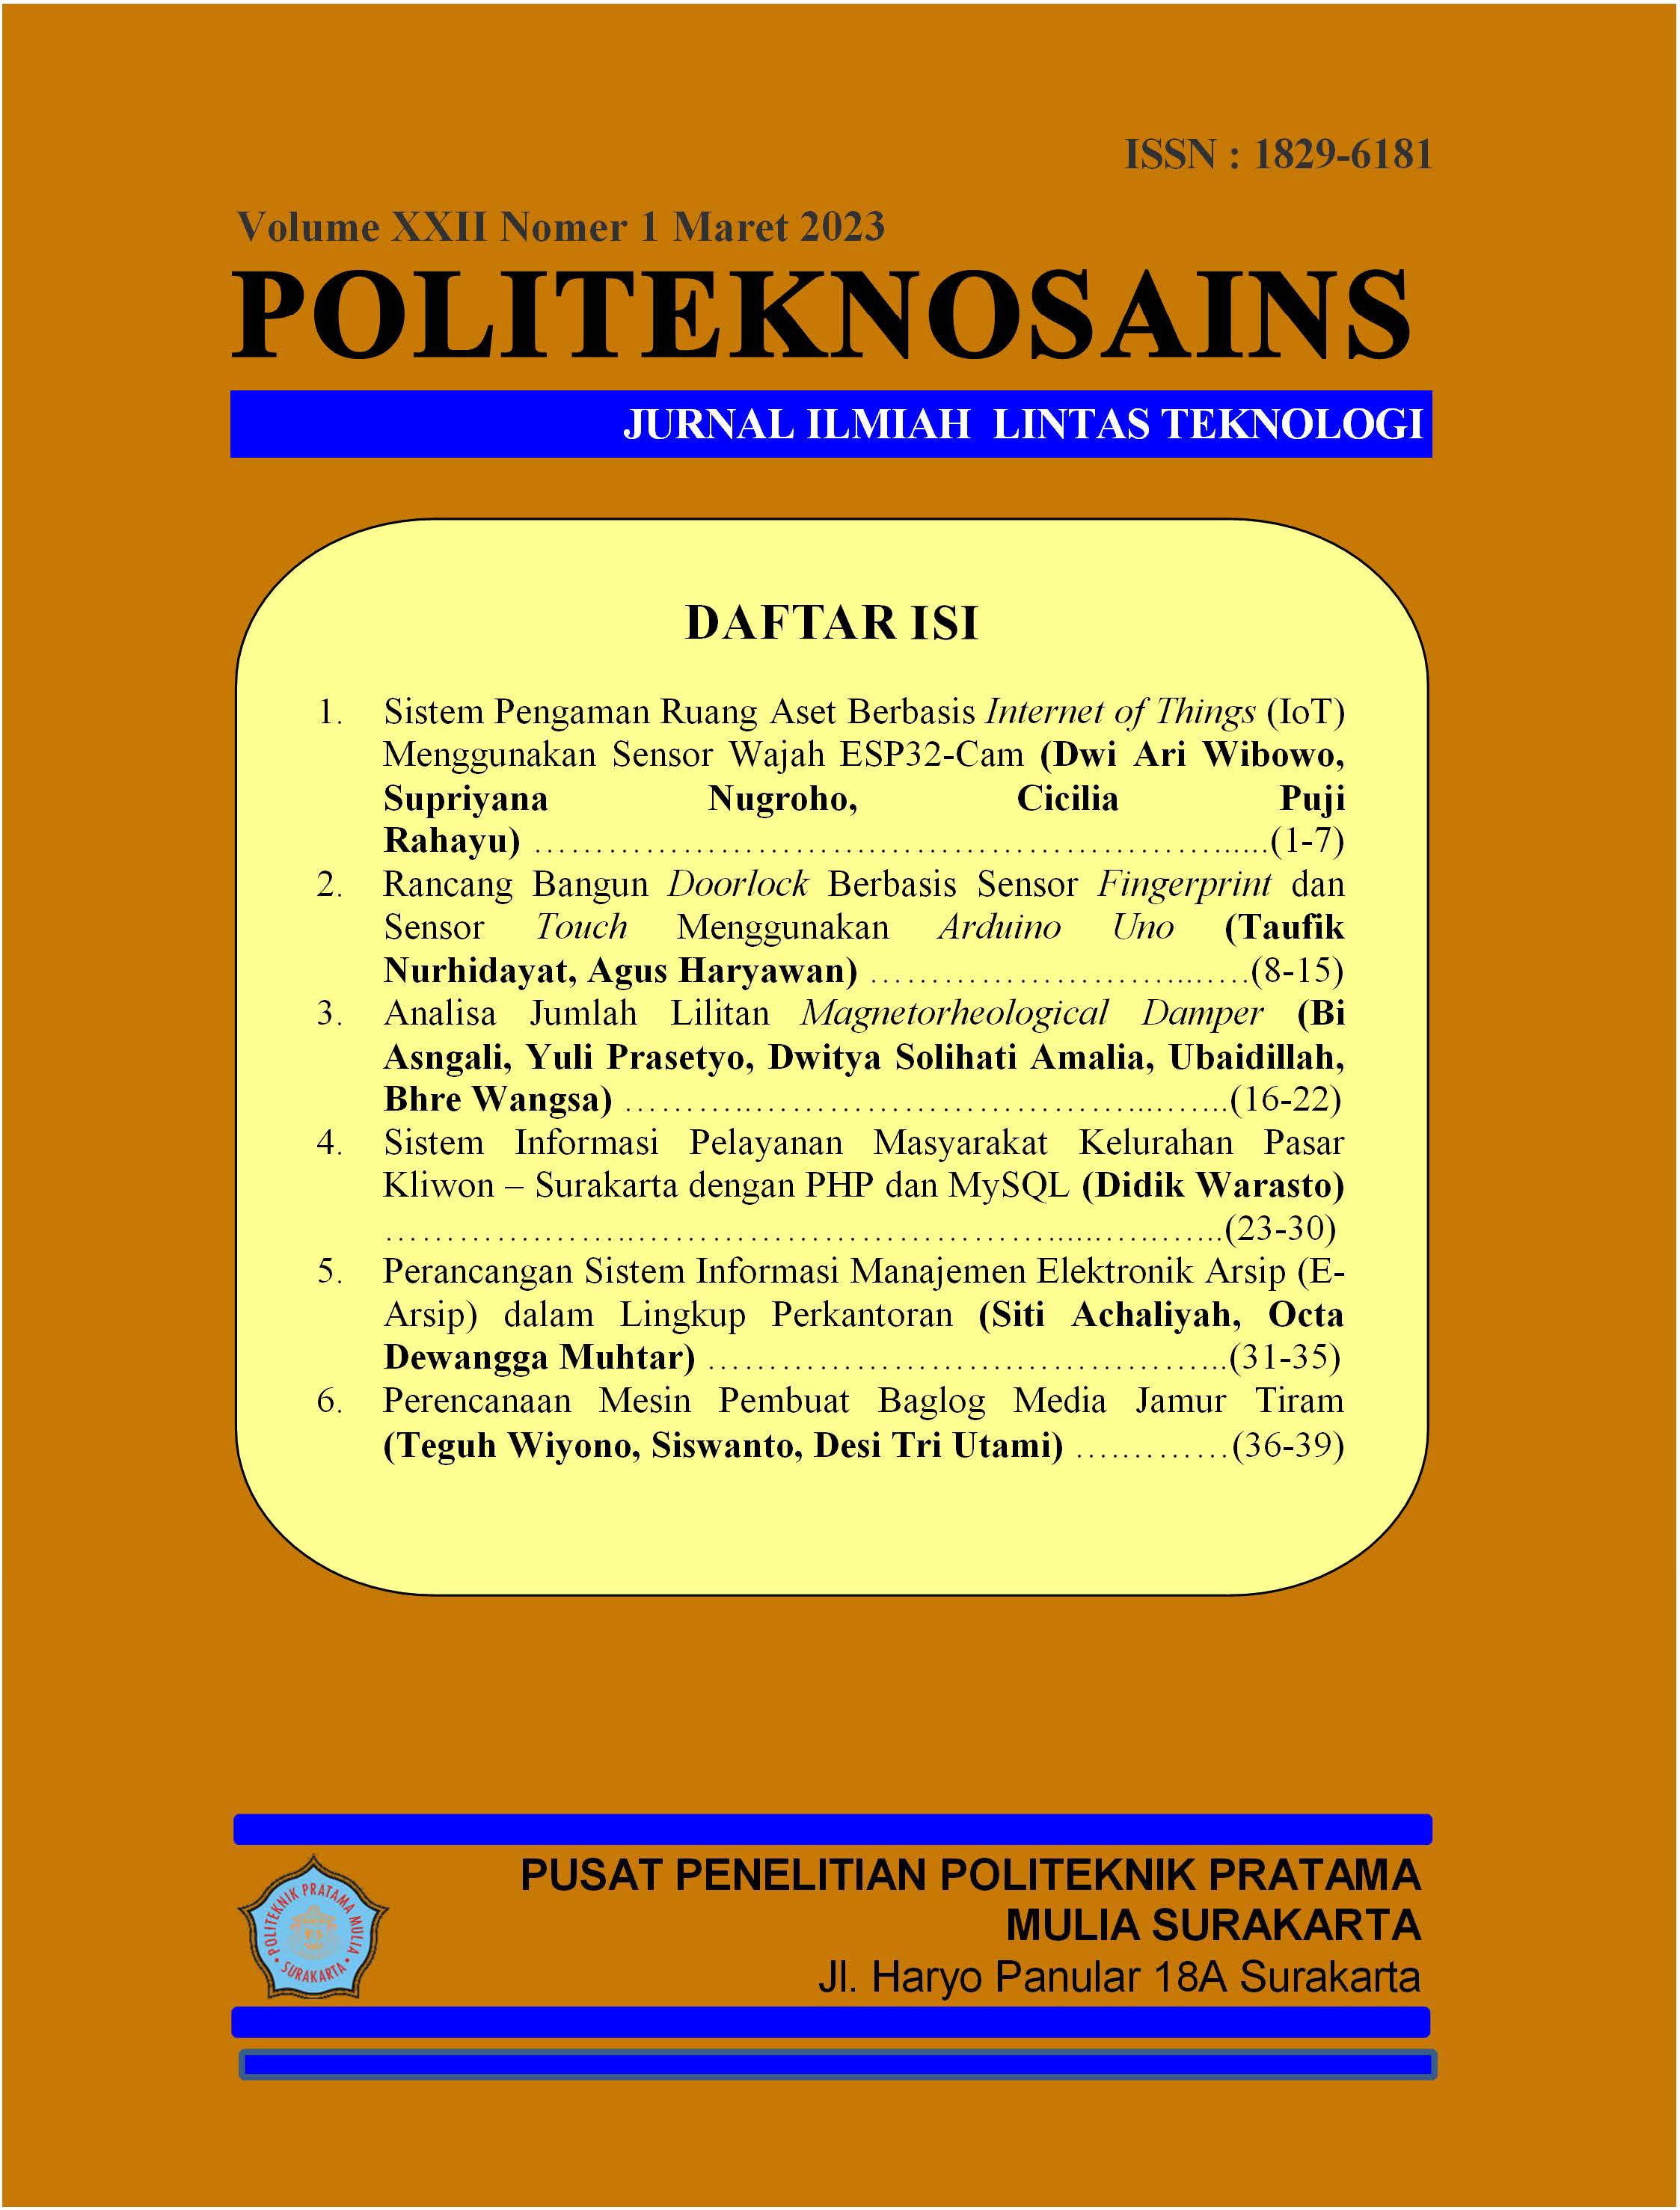 					Lihat Vol 22 No 1 (2023): Jurnal Politeknosains Volume 22 Nomor 1 - Maret 2023
				